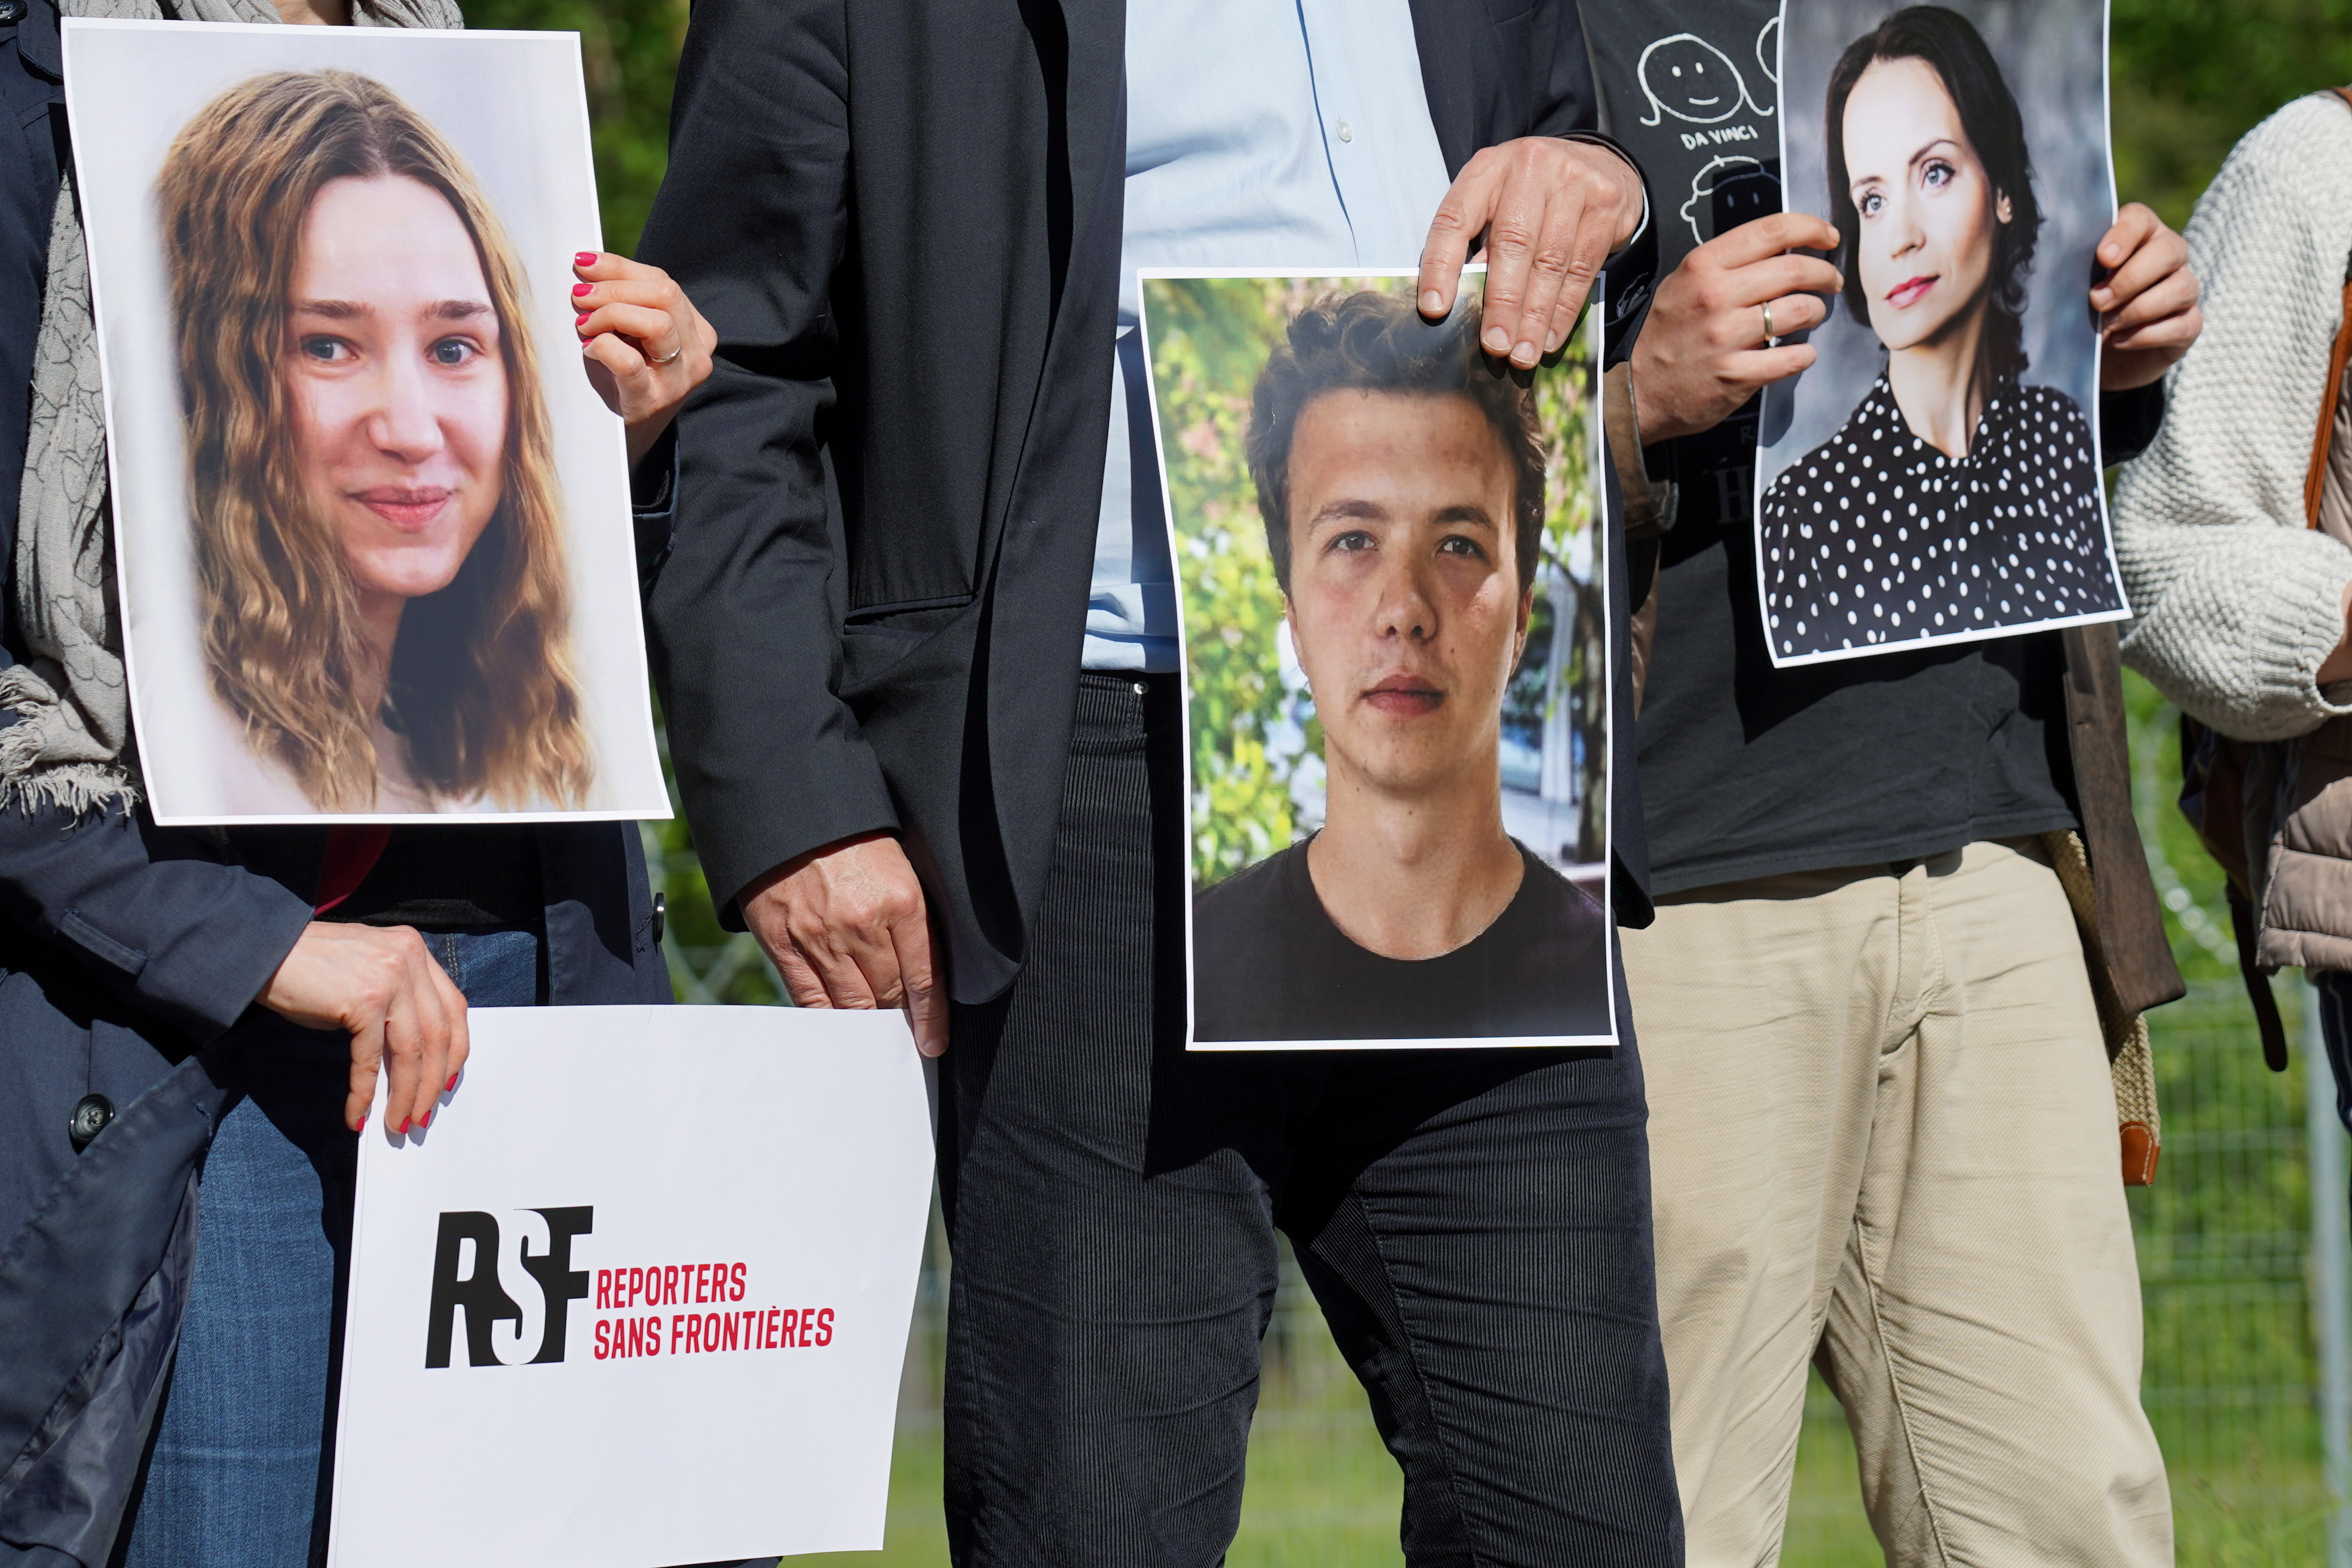 Press advocacy group Reporters Sans Frontiers holds protest against Belarus blogger arrest